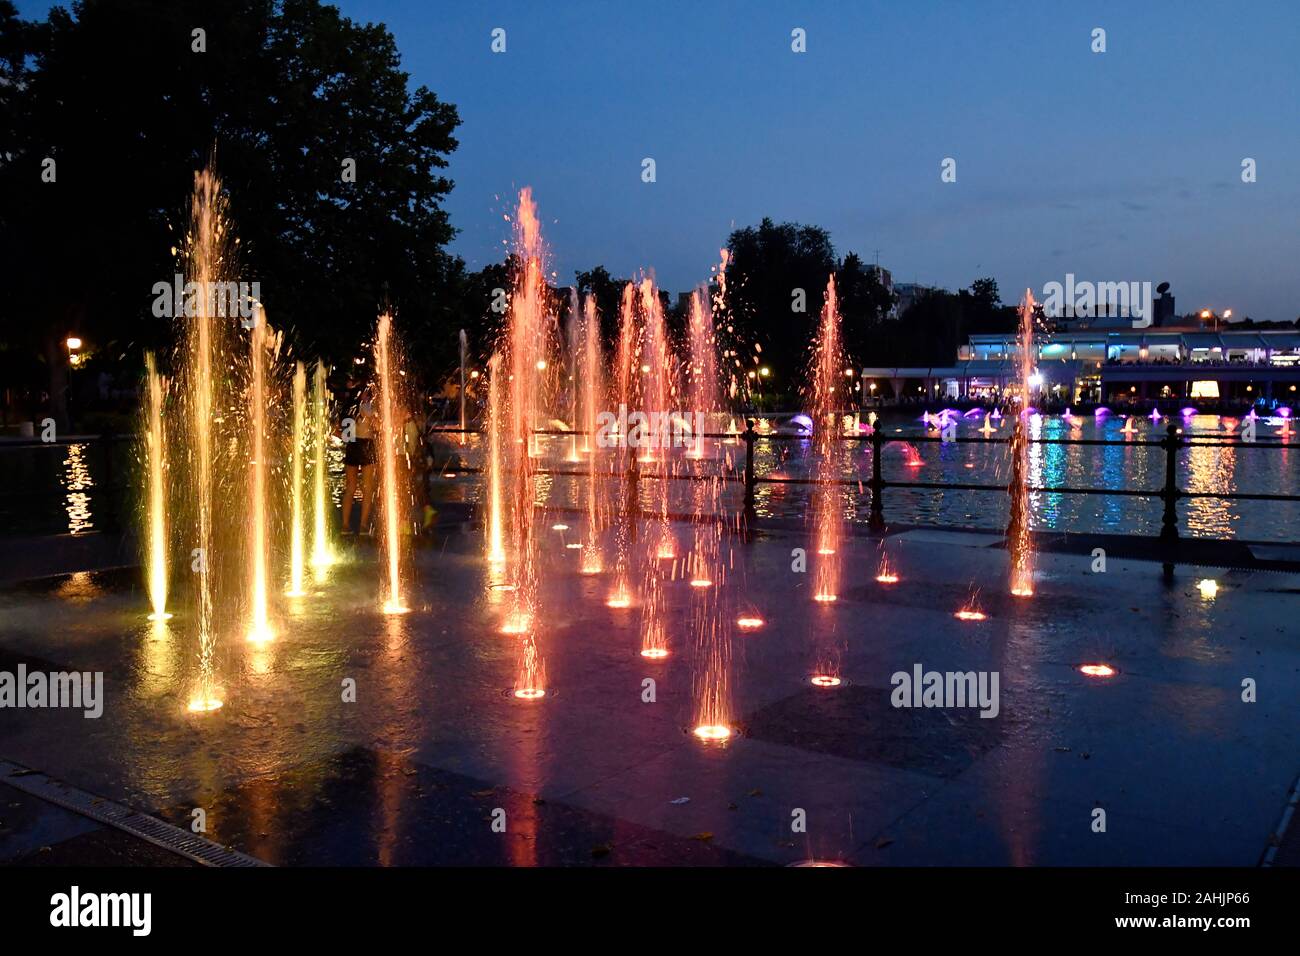 Bulgaria, illuminated fountains and lake on evening in Tsar Simeons Garden, Stock Photo